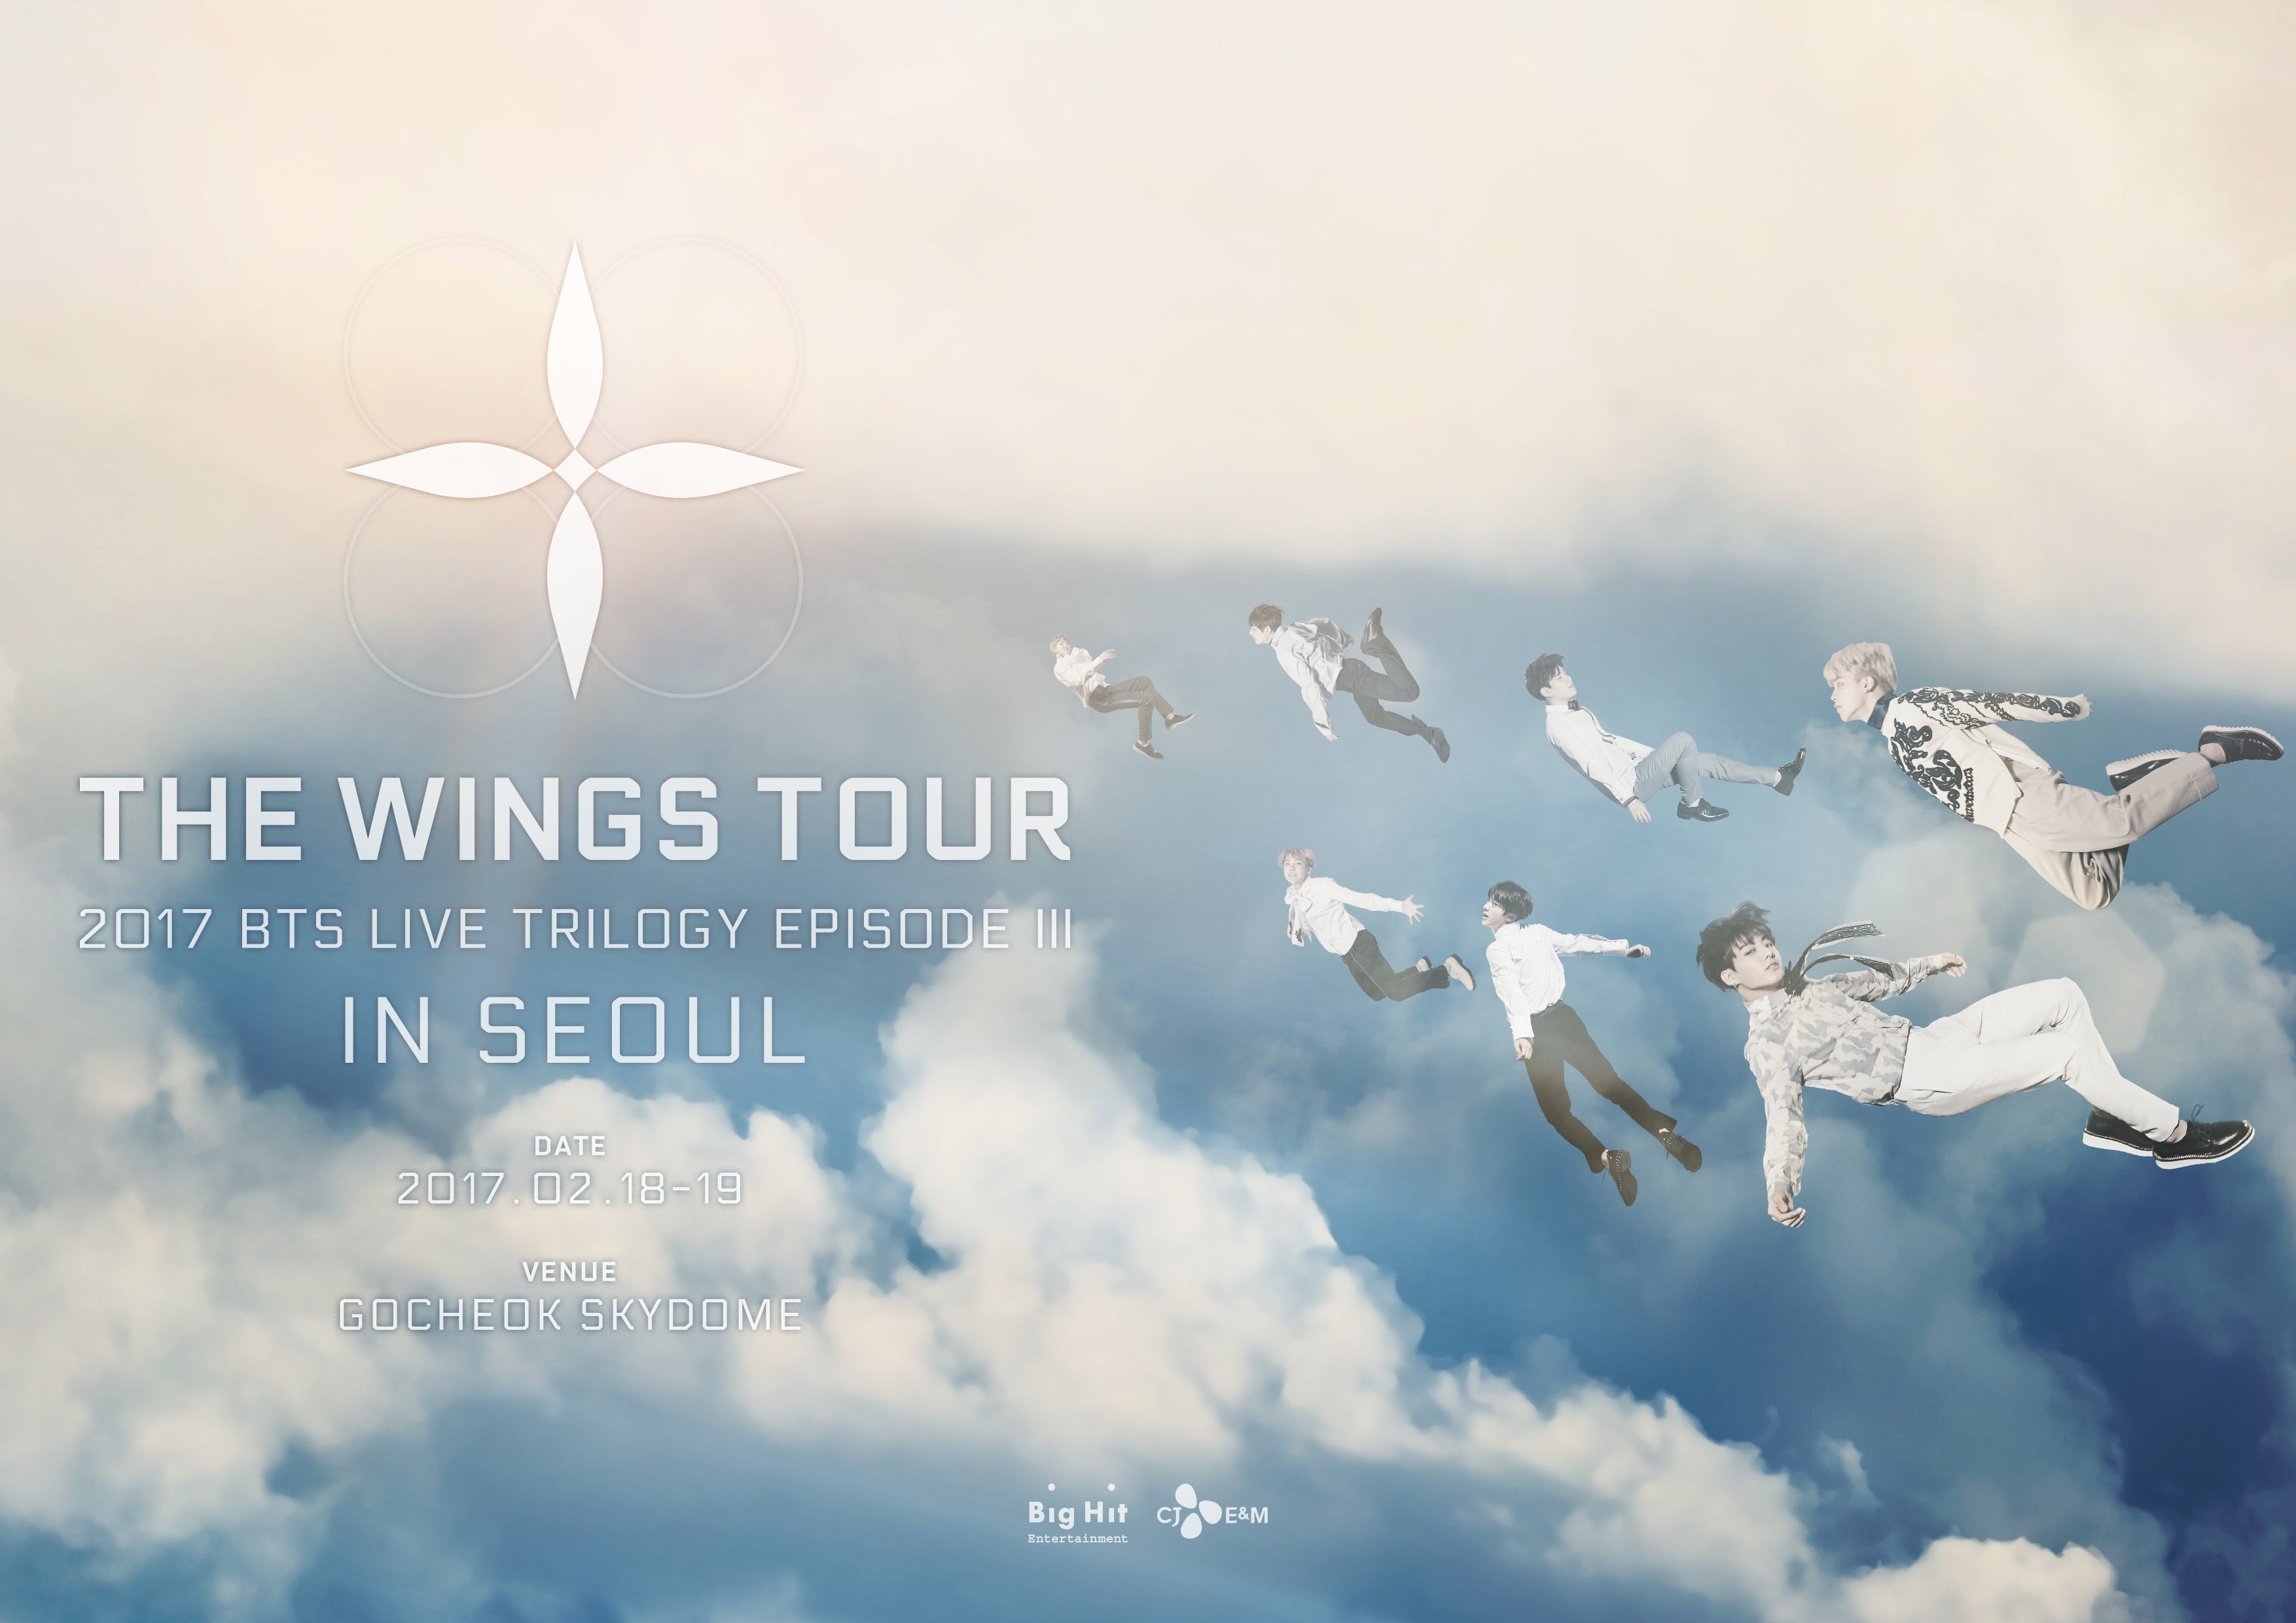 BTS Live Trilogy Episode III: The Wings Tour | BTS Wiki | Fandom